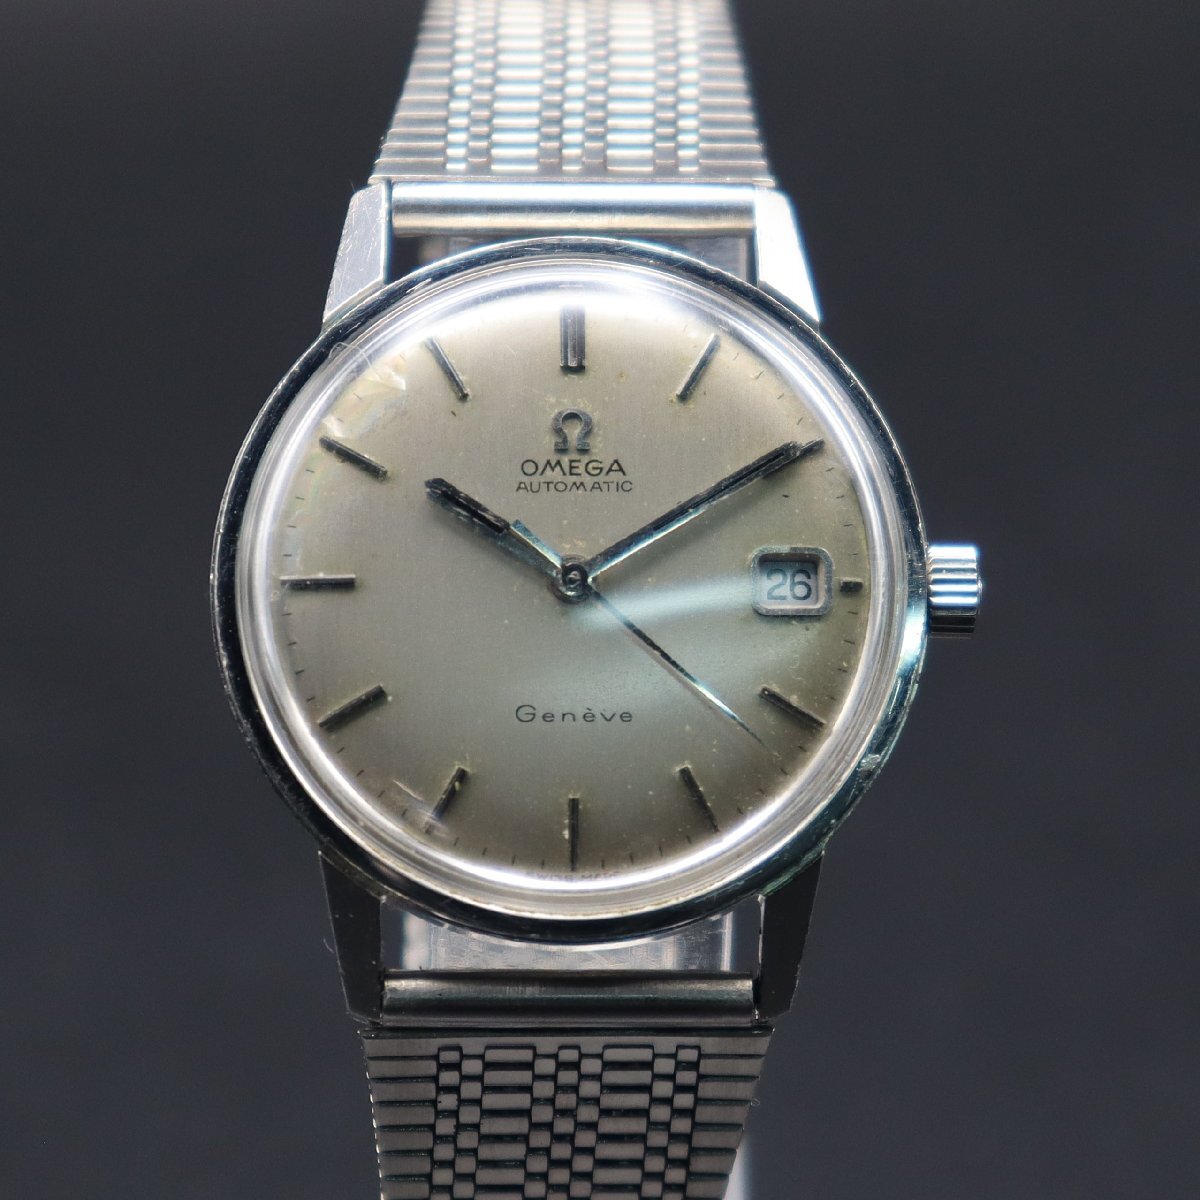 OMEGA GENEVE オメガ ジュネーブ Ref.166.037 Cal.565 自動巻き 1970年頃製造 デイト スイス製 アンティーク メンズ腕時計_画像2